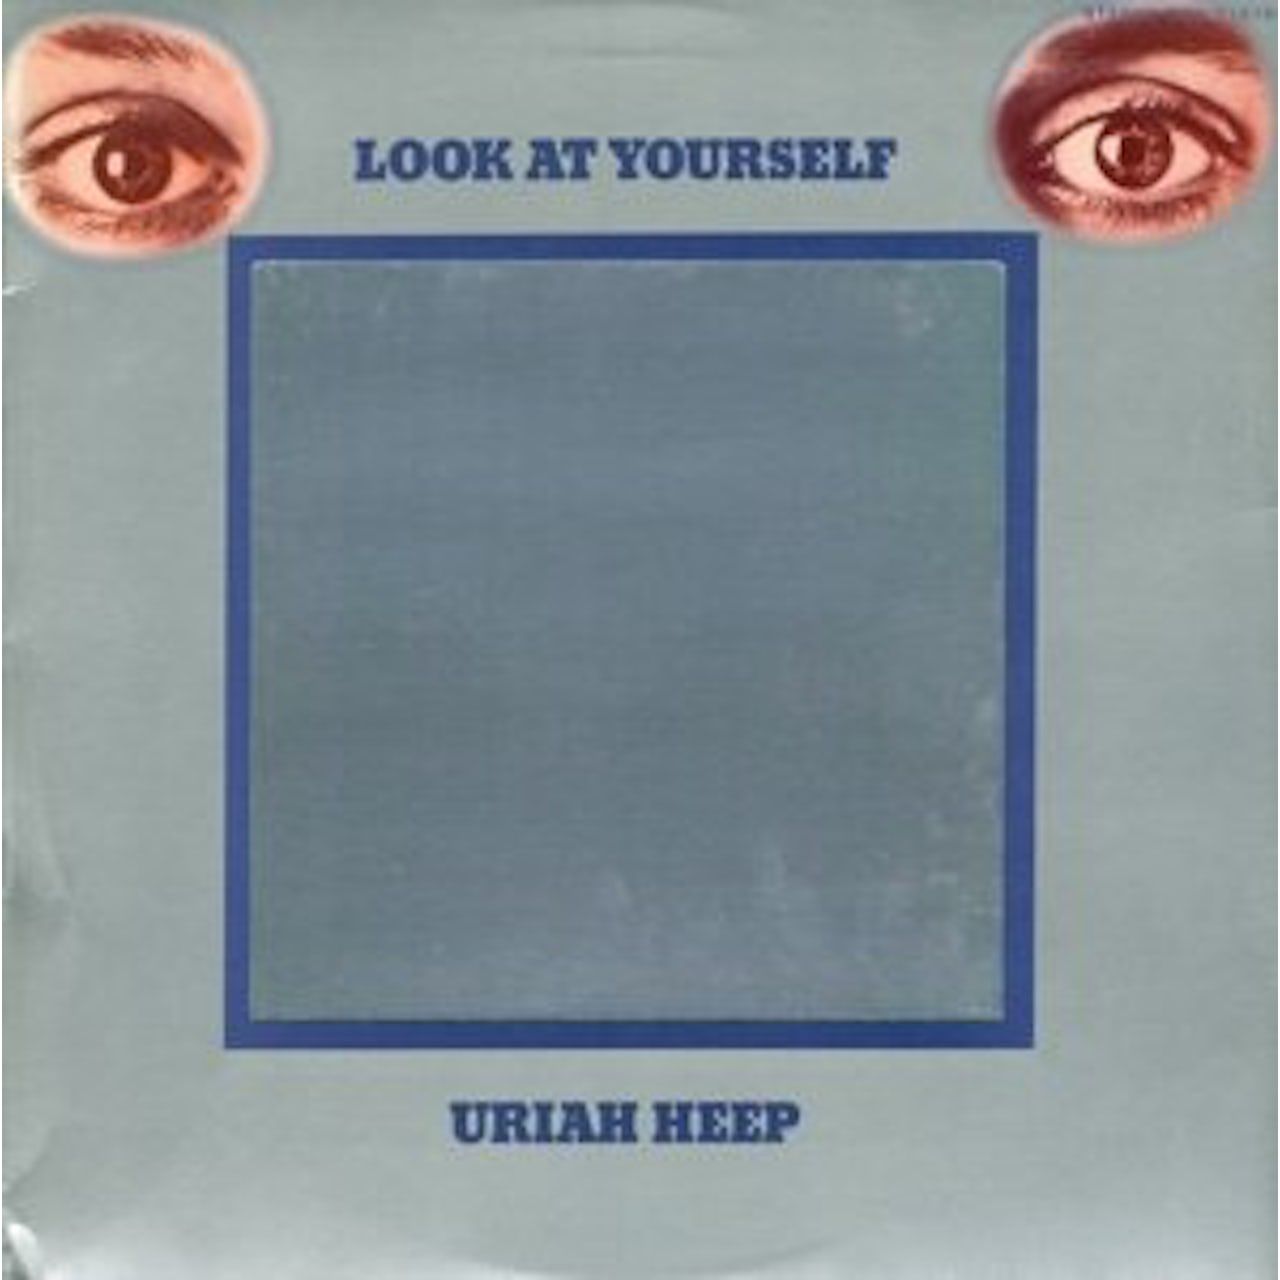 5414939928376, Виниловая пластинка Uriah Heep, Look At Yourself виниловая пластинка uriah heep look at yourself 50th anniversary limited clear lp